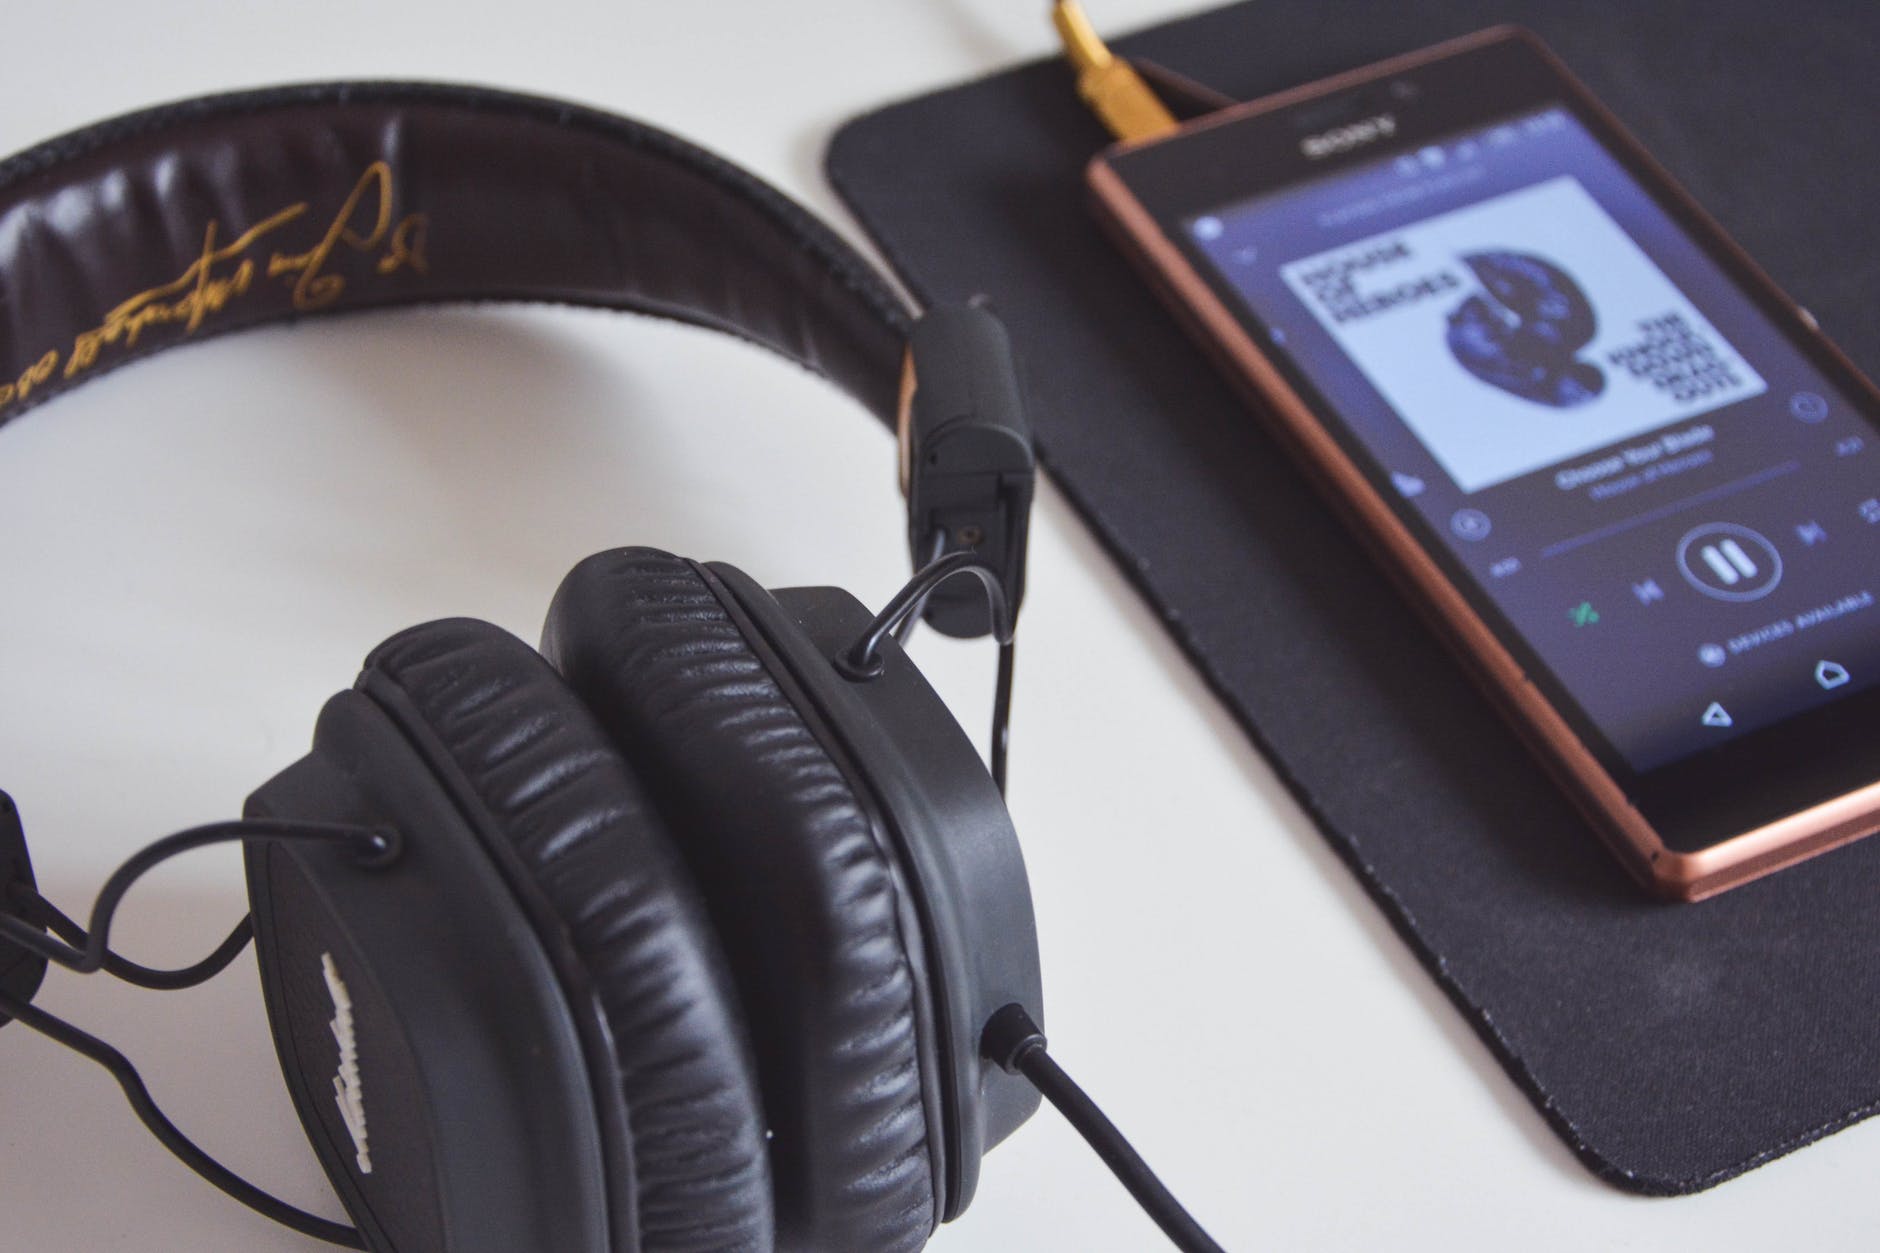 black corded headphones beside sony android smartphone